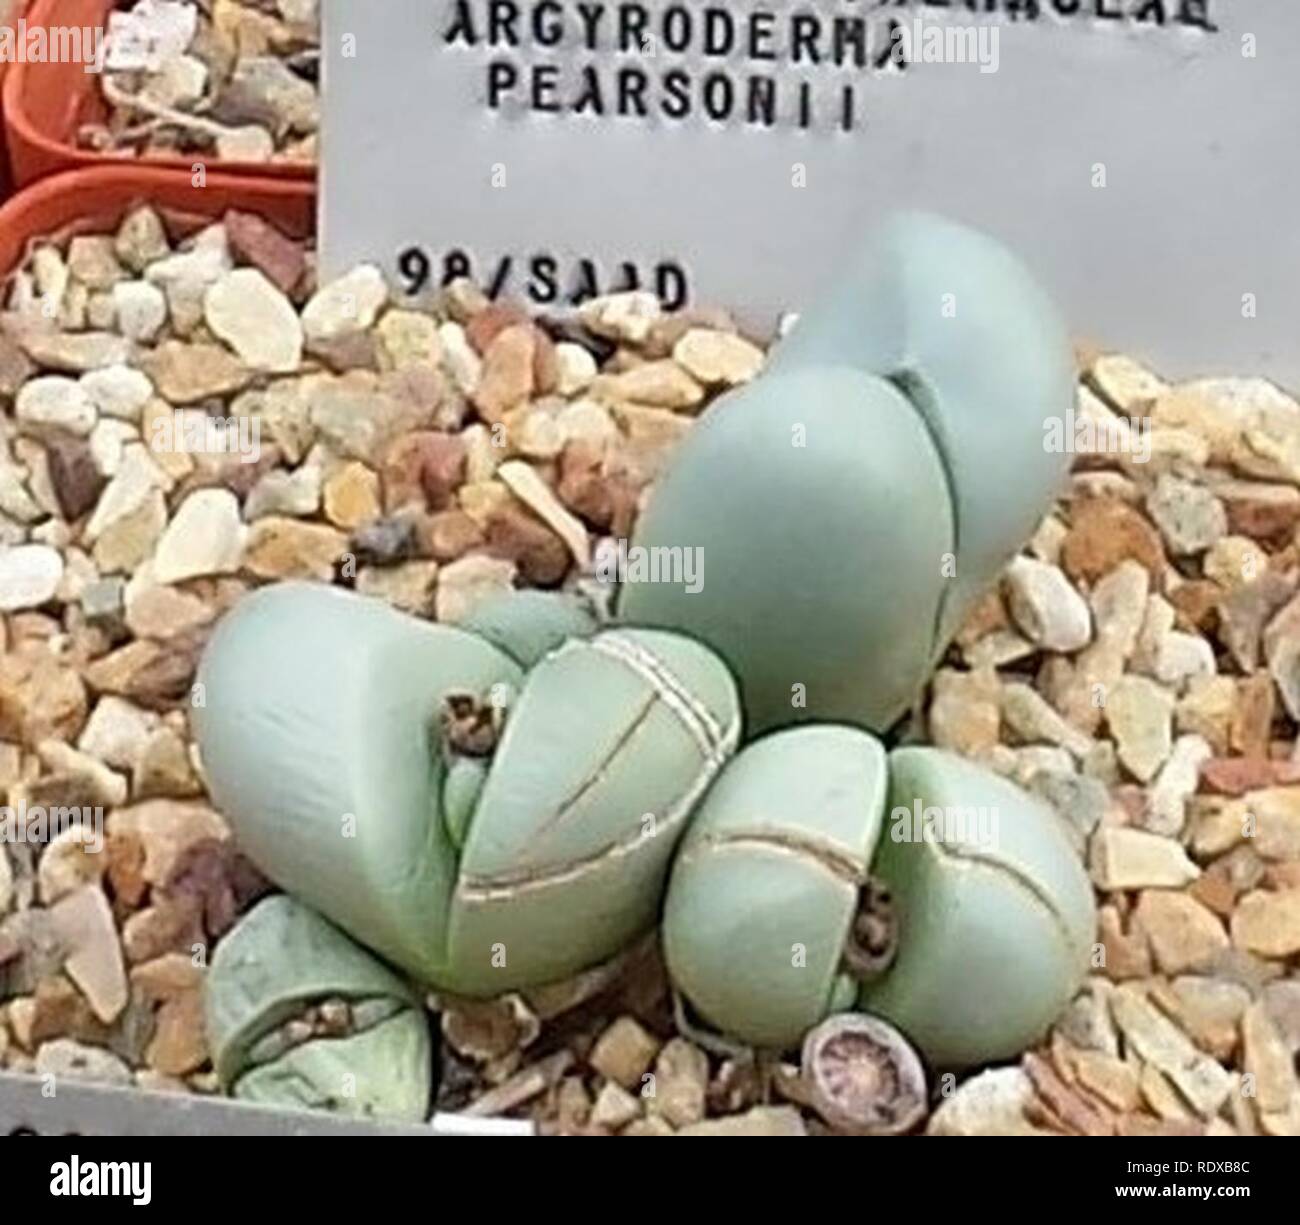 Argyroderma pearsonii - RSA5. Stock Photo